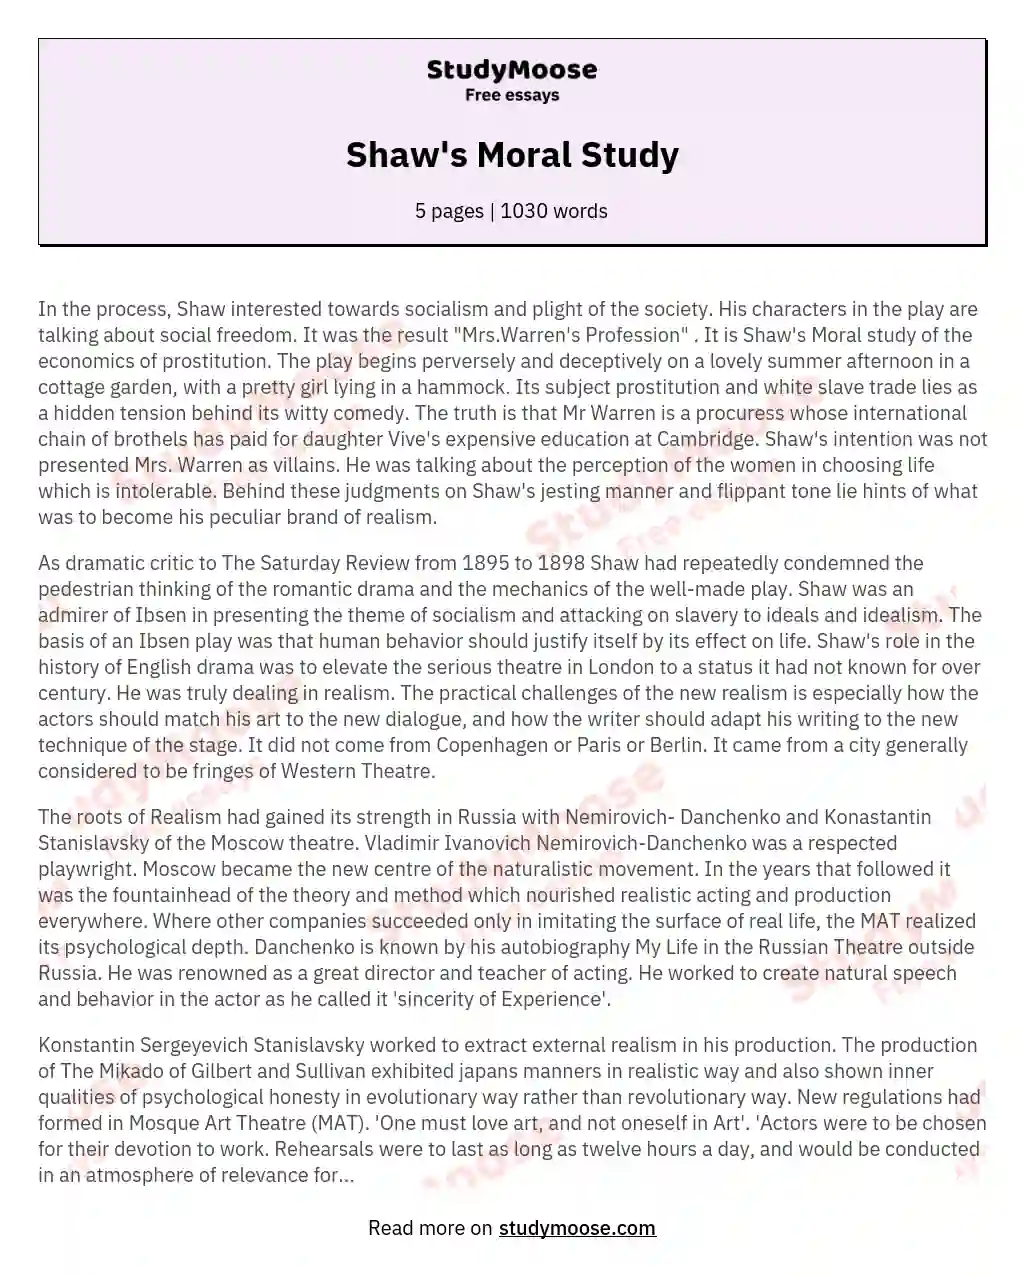 Shaw's Moral Study essay